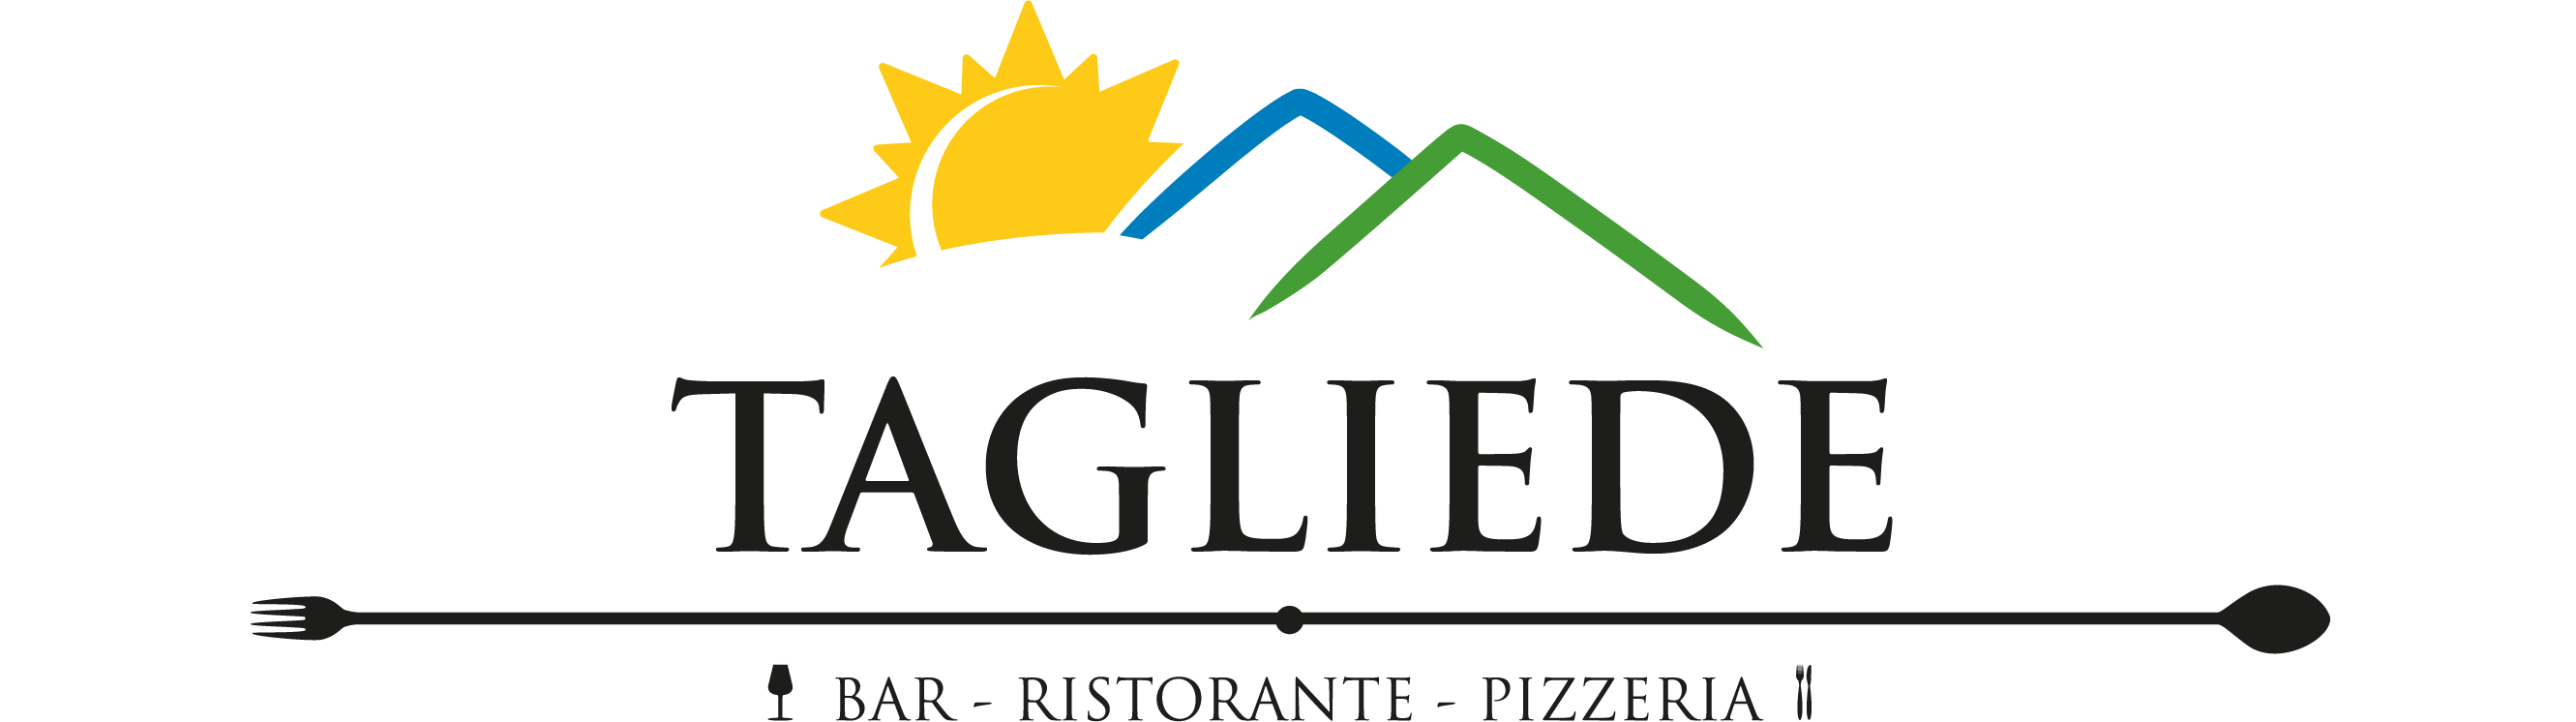 logo tagliede